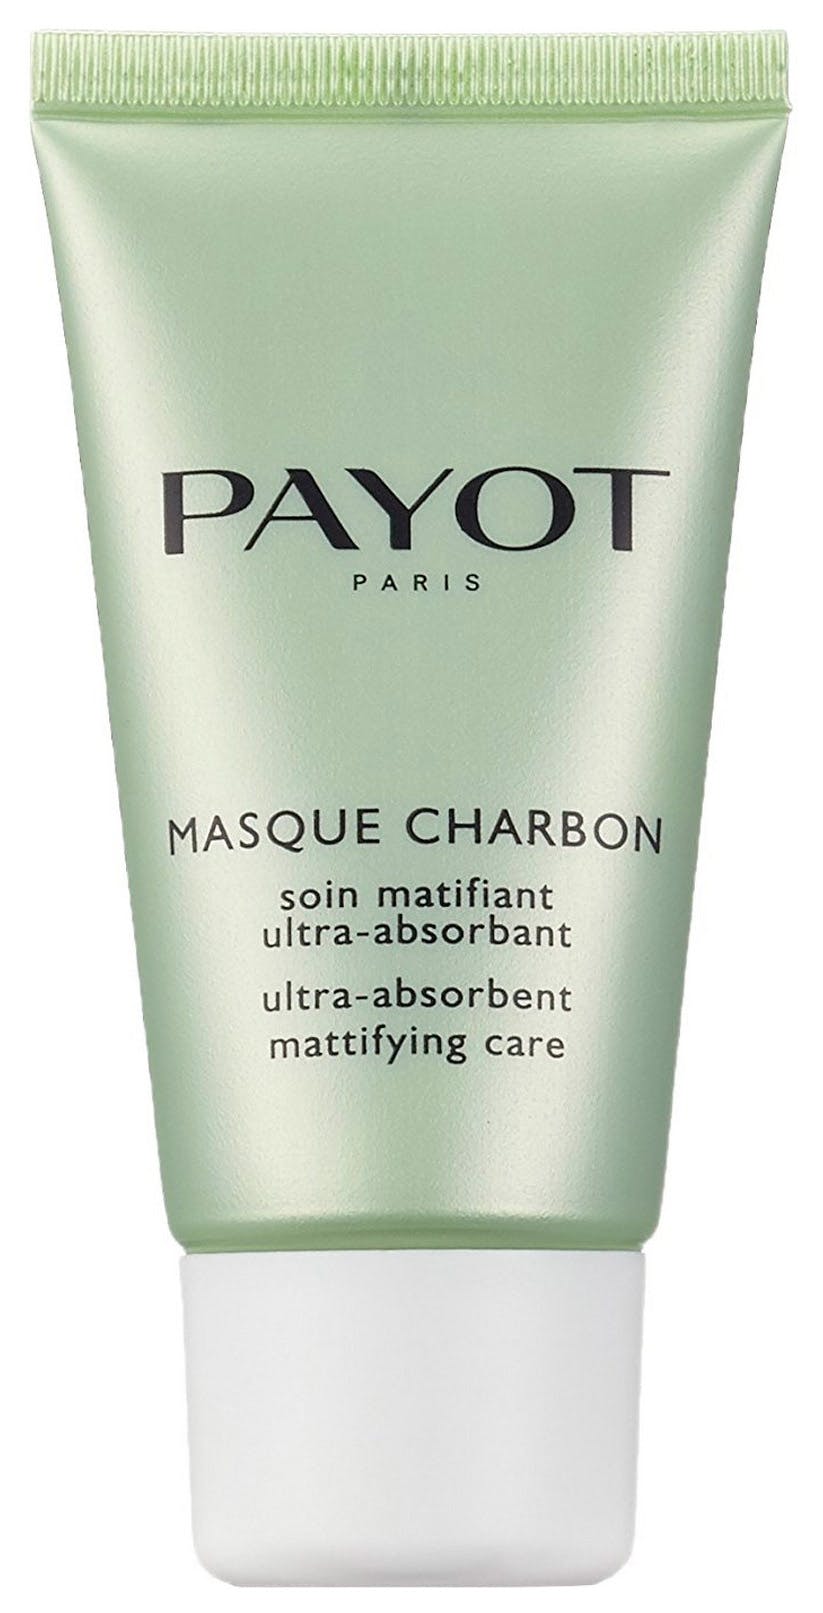 Payot Pate Grise Masque Charbon Суперадсорбувальна маска для обличчя